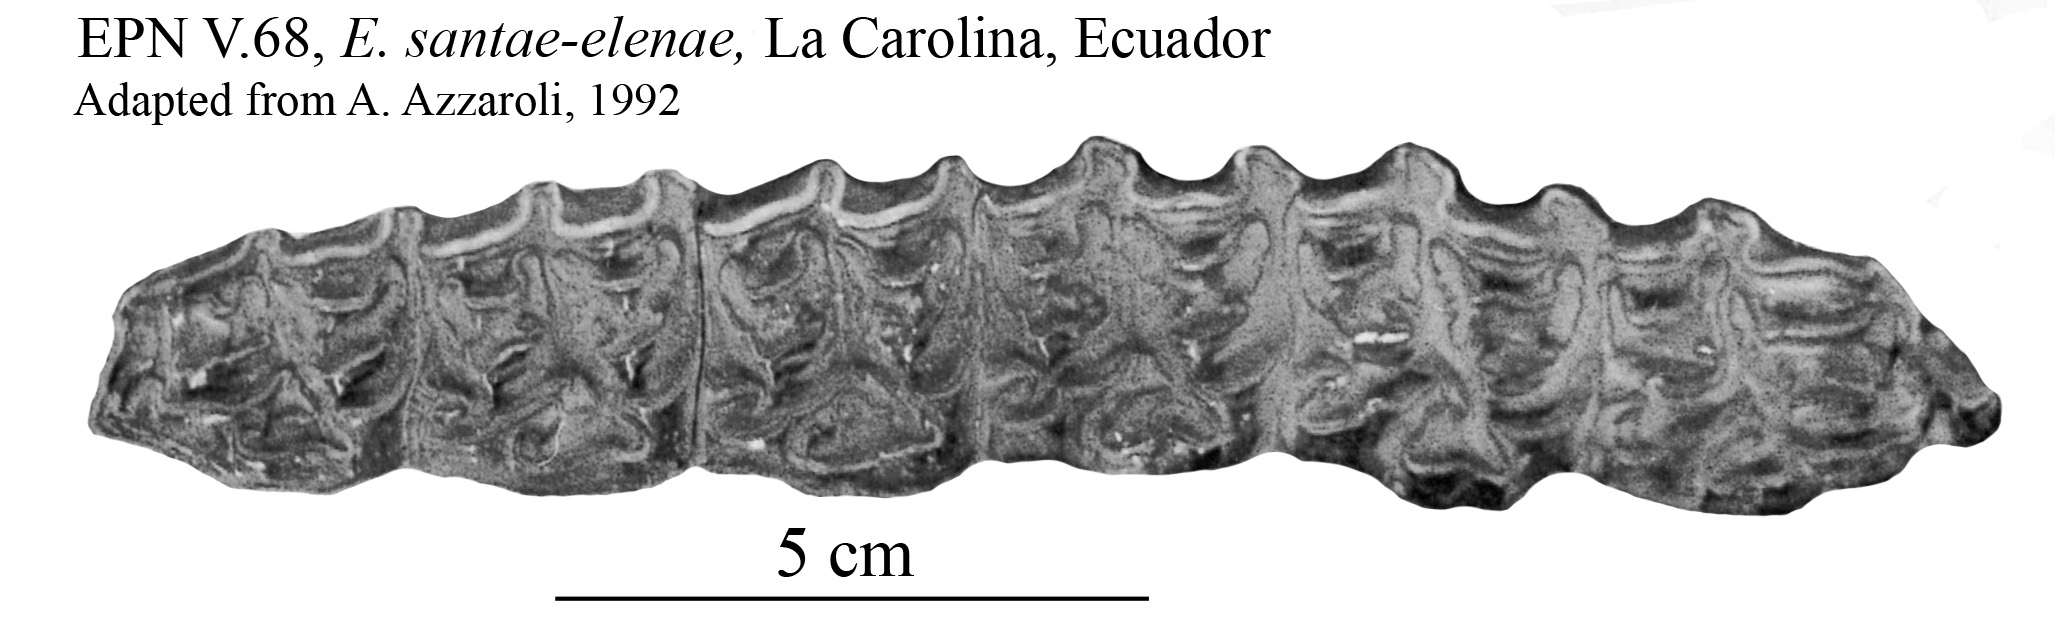 Fig. 9 Equus santae-elenae, Upper cheek teeth